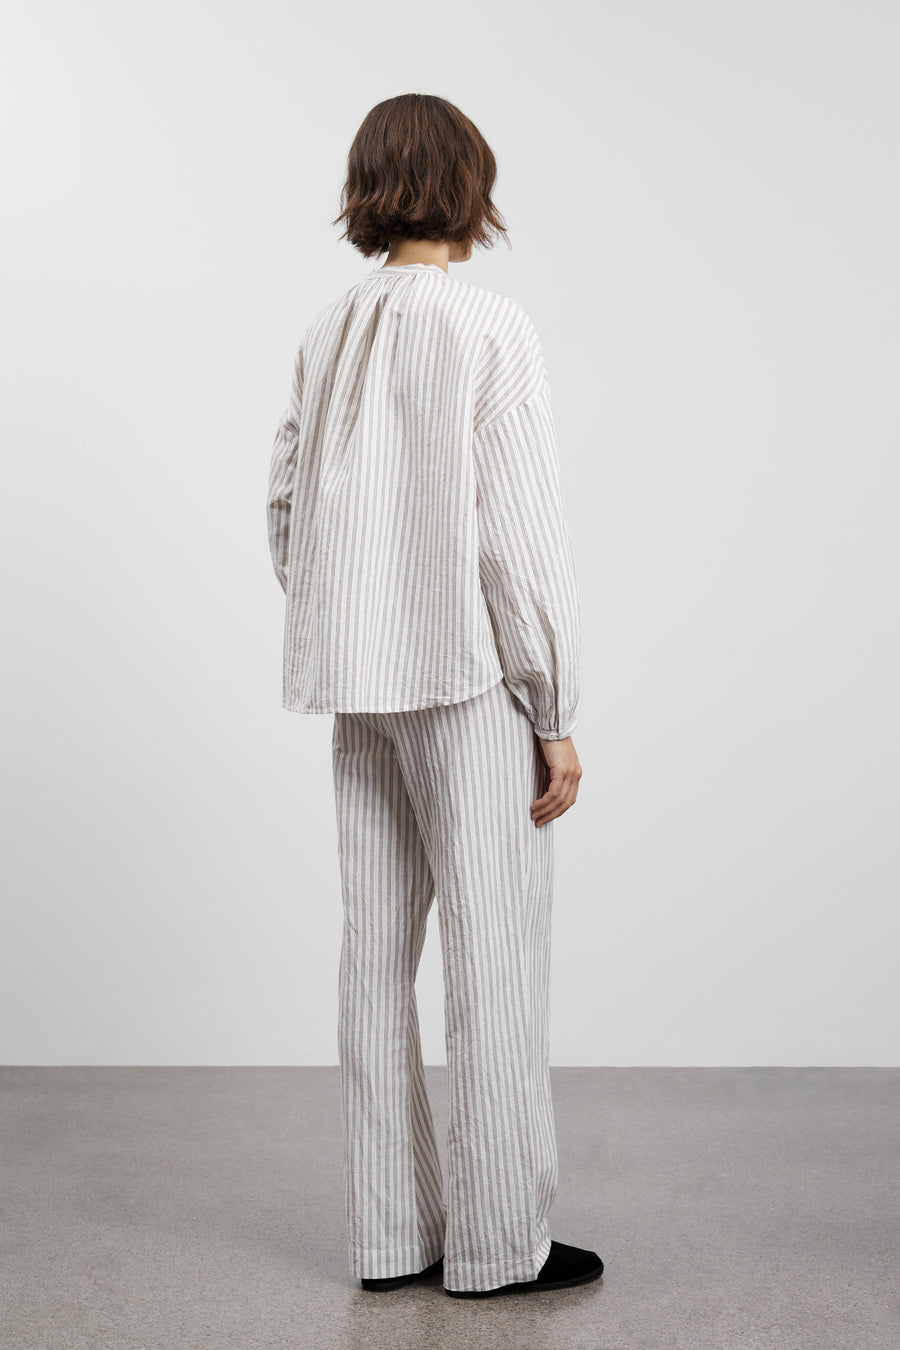 Cilla Shirt -Brown/Off white Stripe